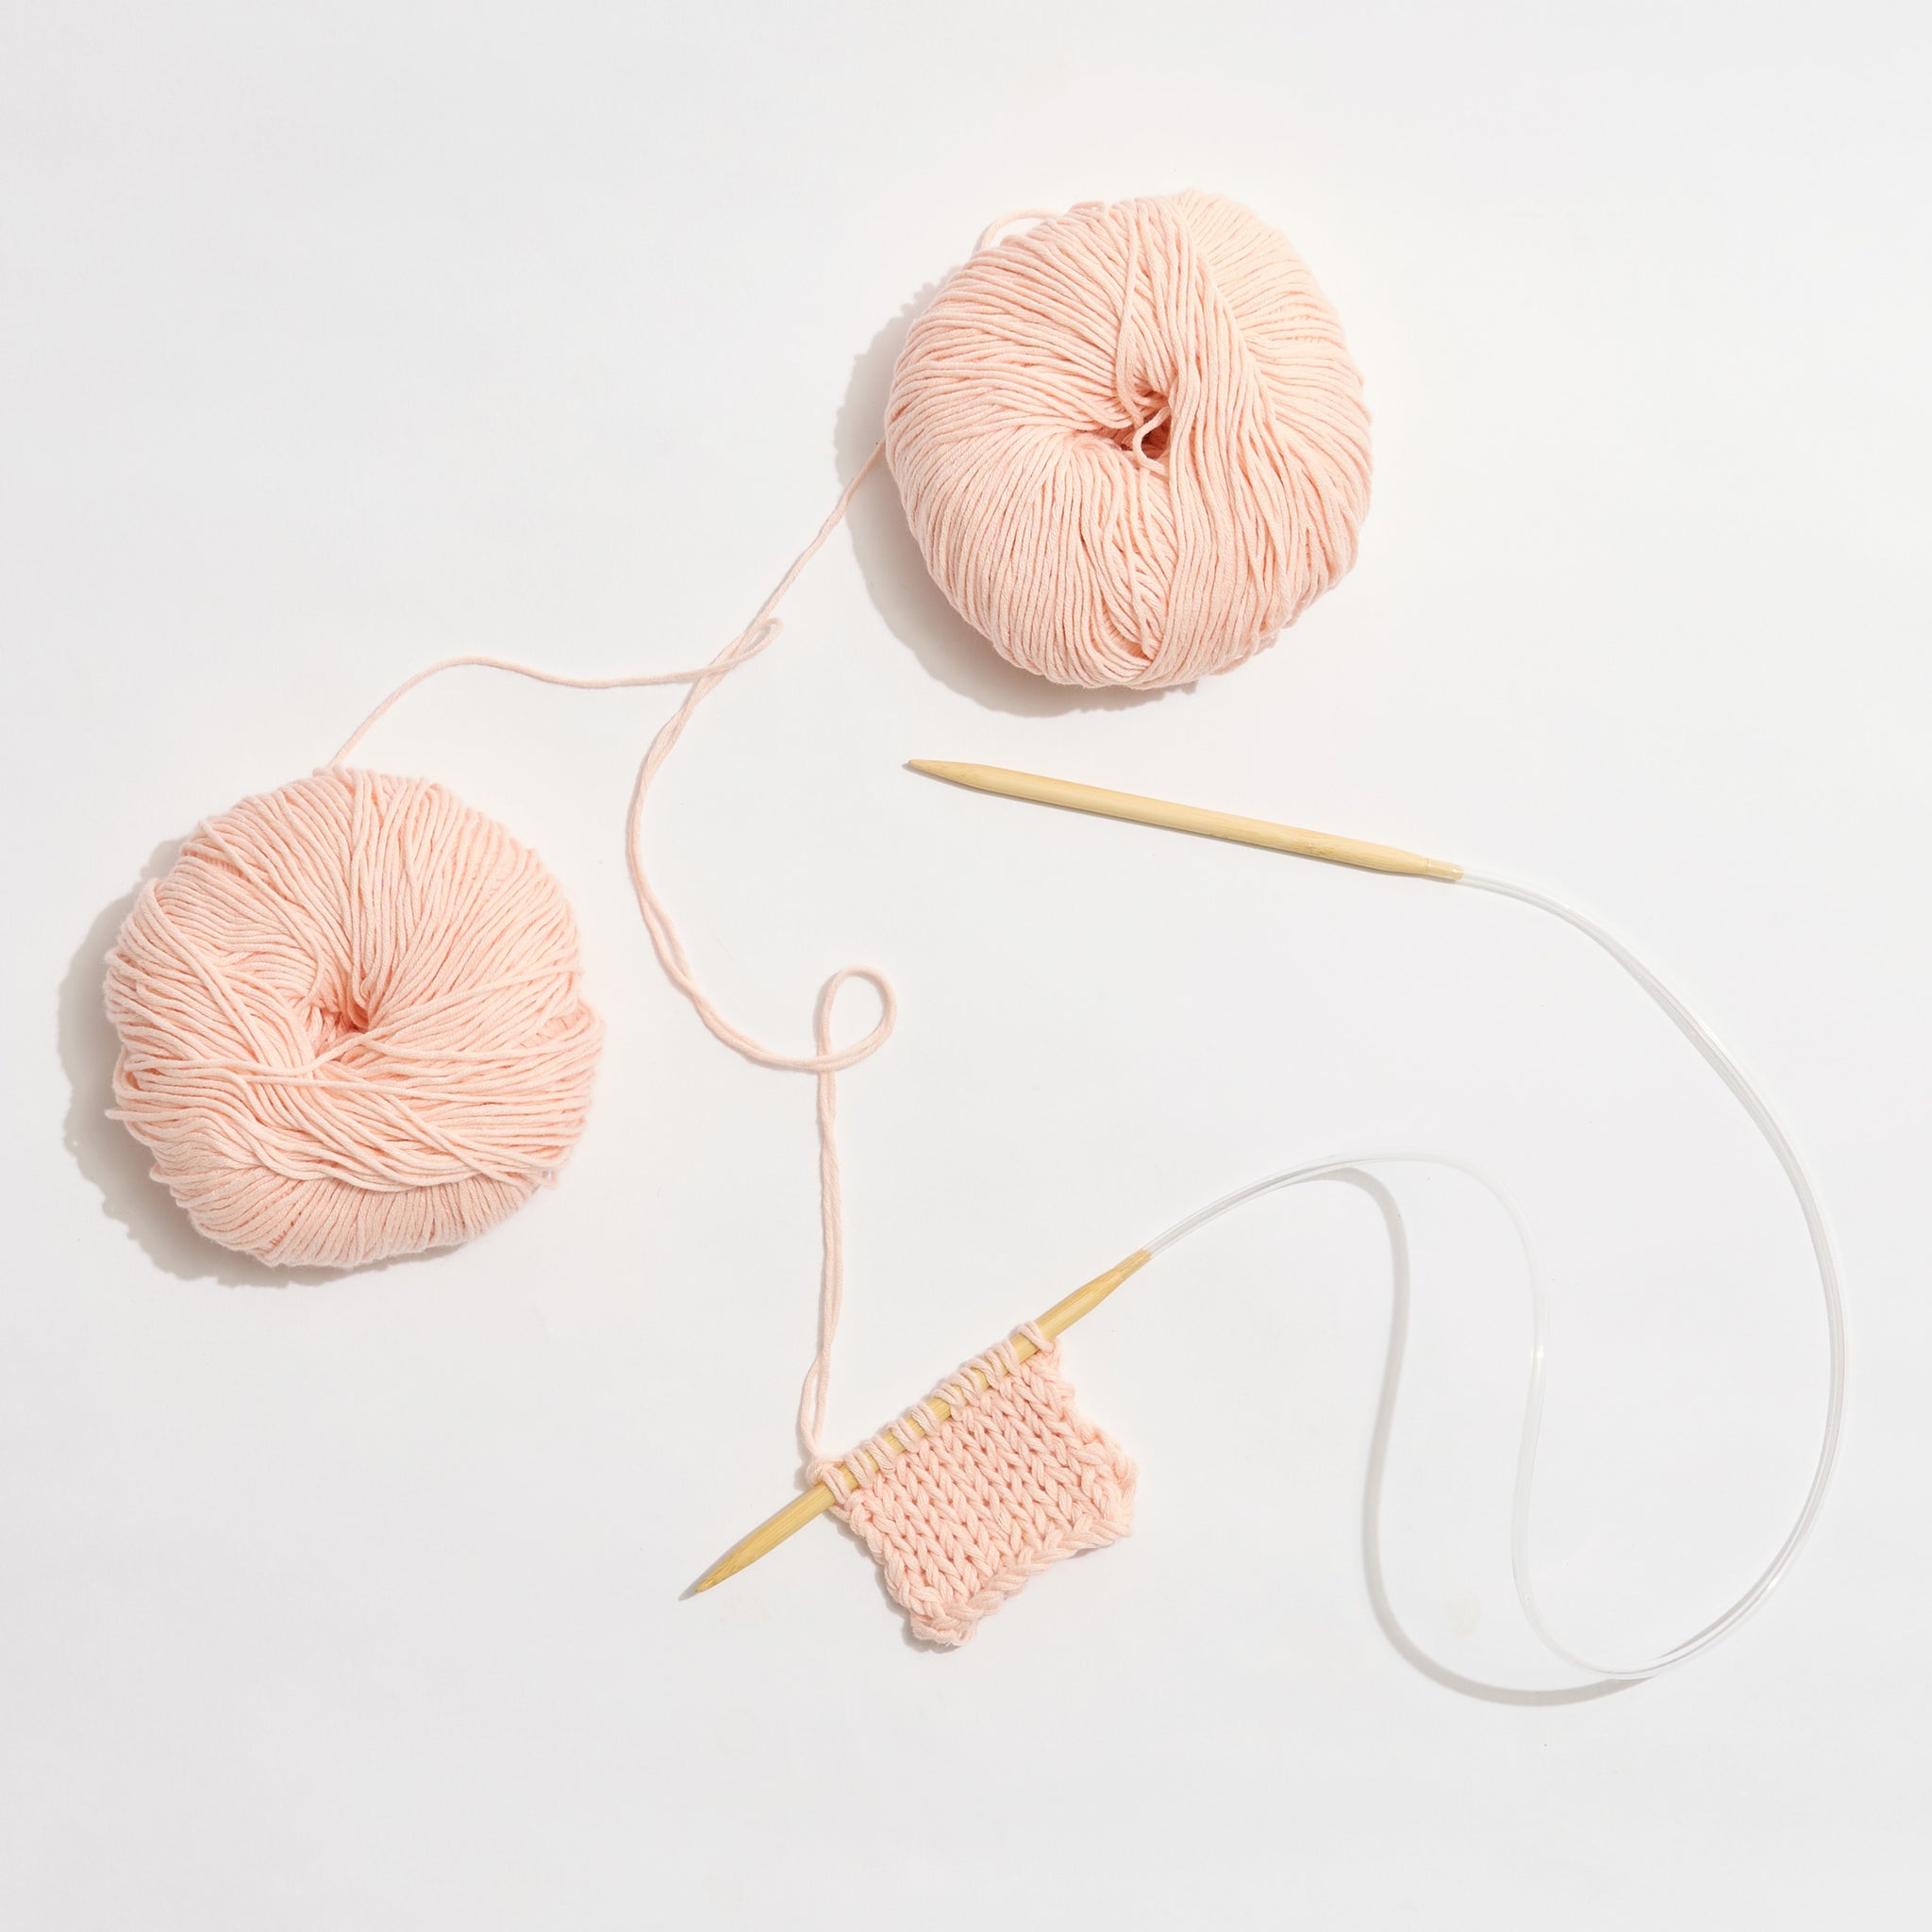 Size 6mm Circular Knitting Needles